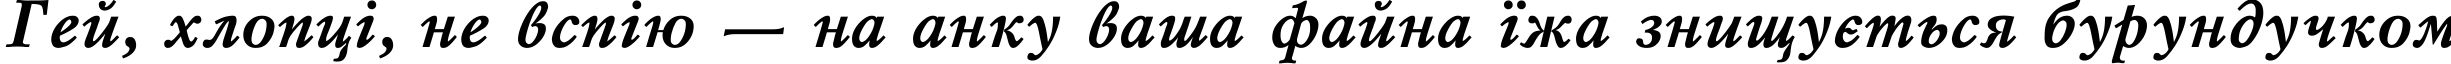 Пример написания шрифтом Mysl Bold Italic текста на украинском